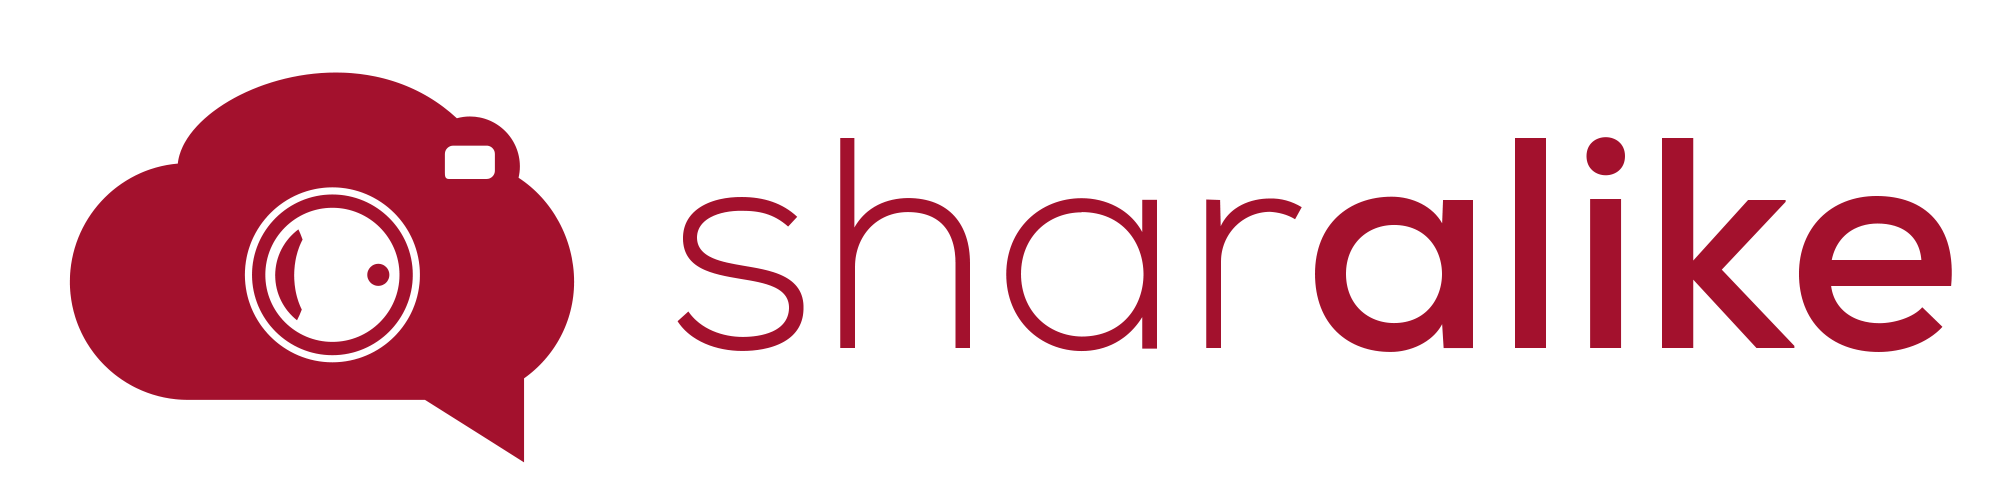 Logo Sharalike